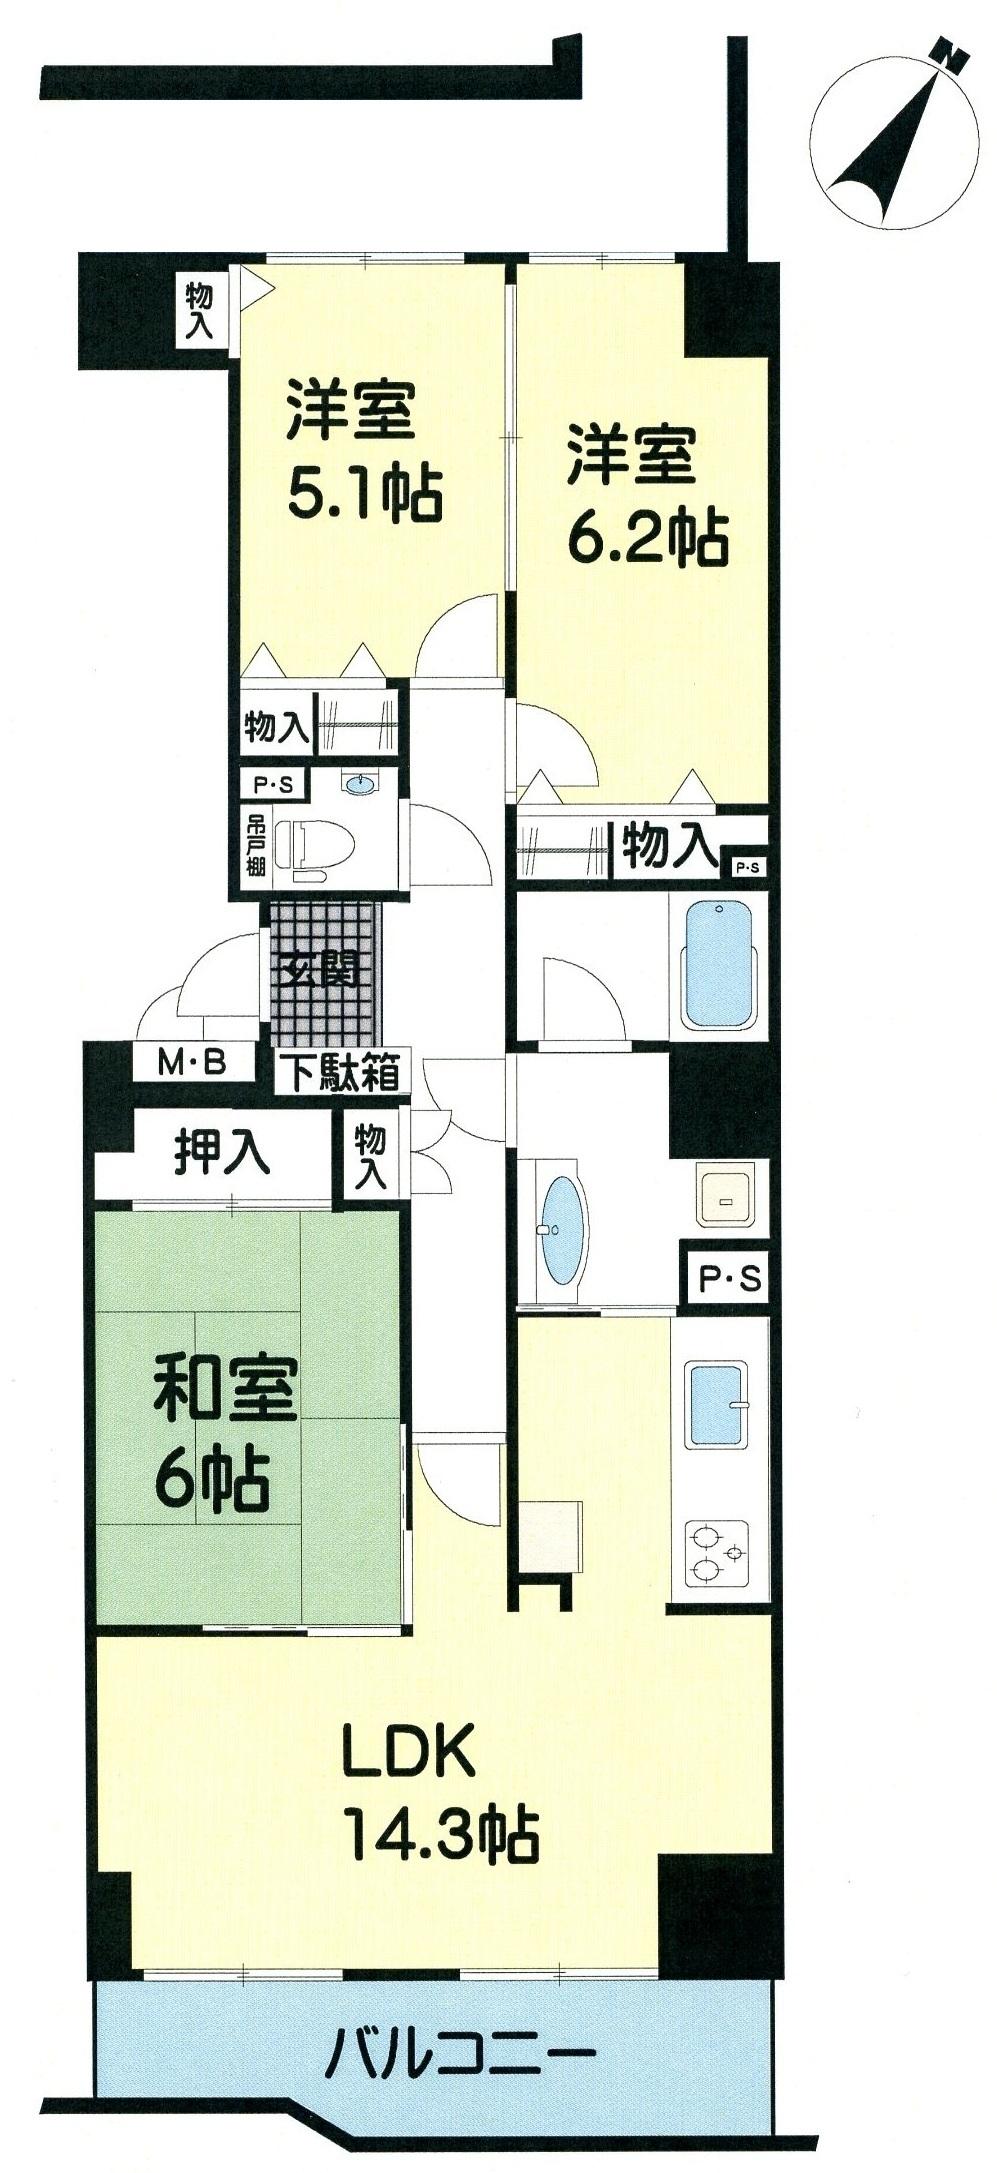 Floor plan. 3LDK, Price 13.8 million yen, Footprint 75.6 sq m , Balcony area 7.45 sq m floor plan